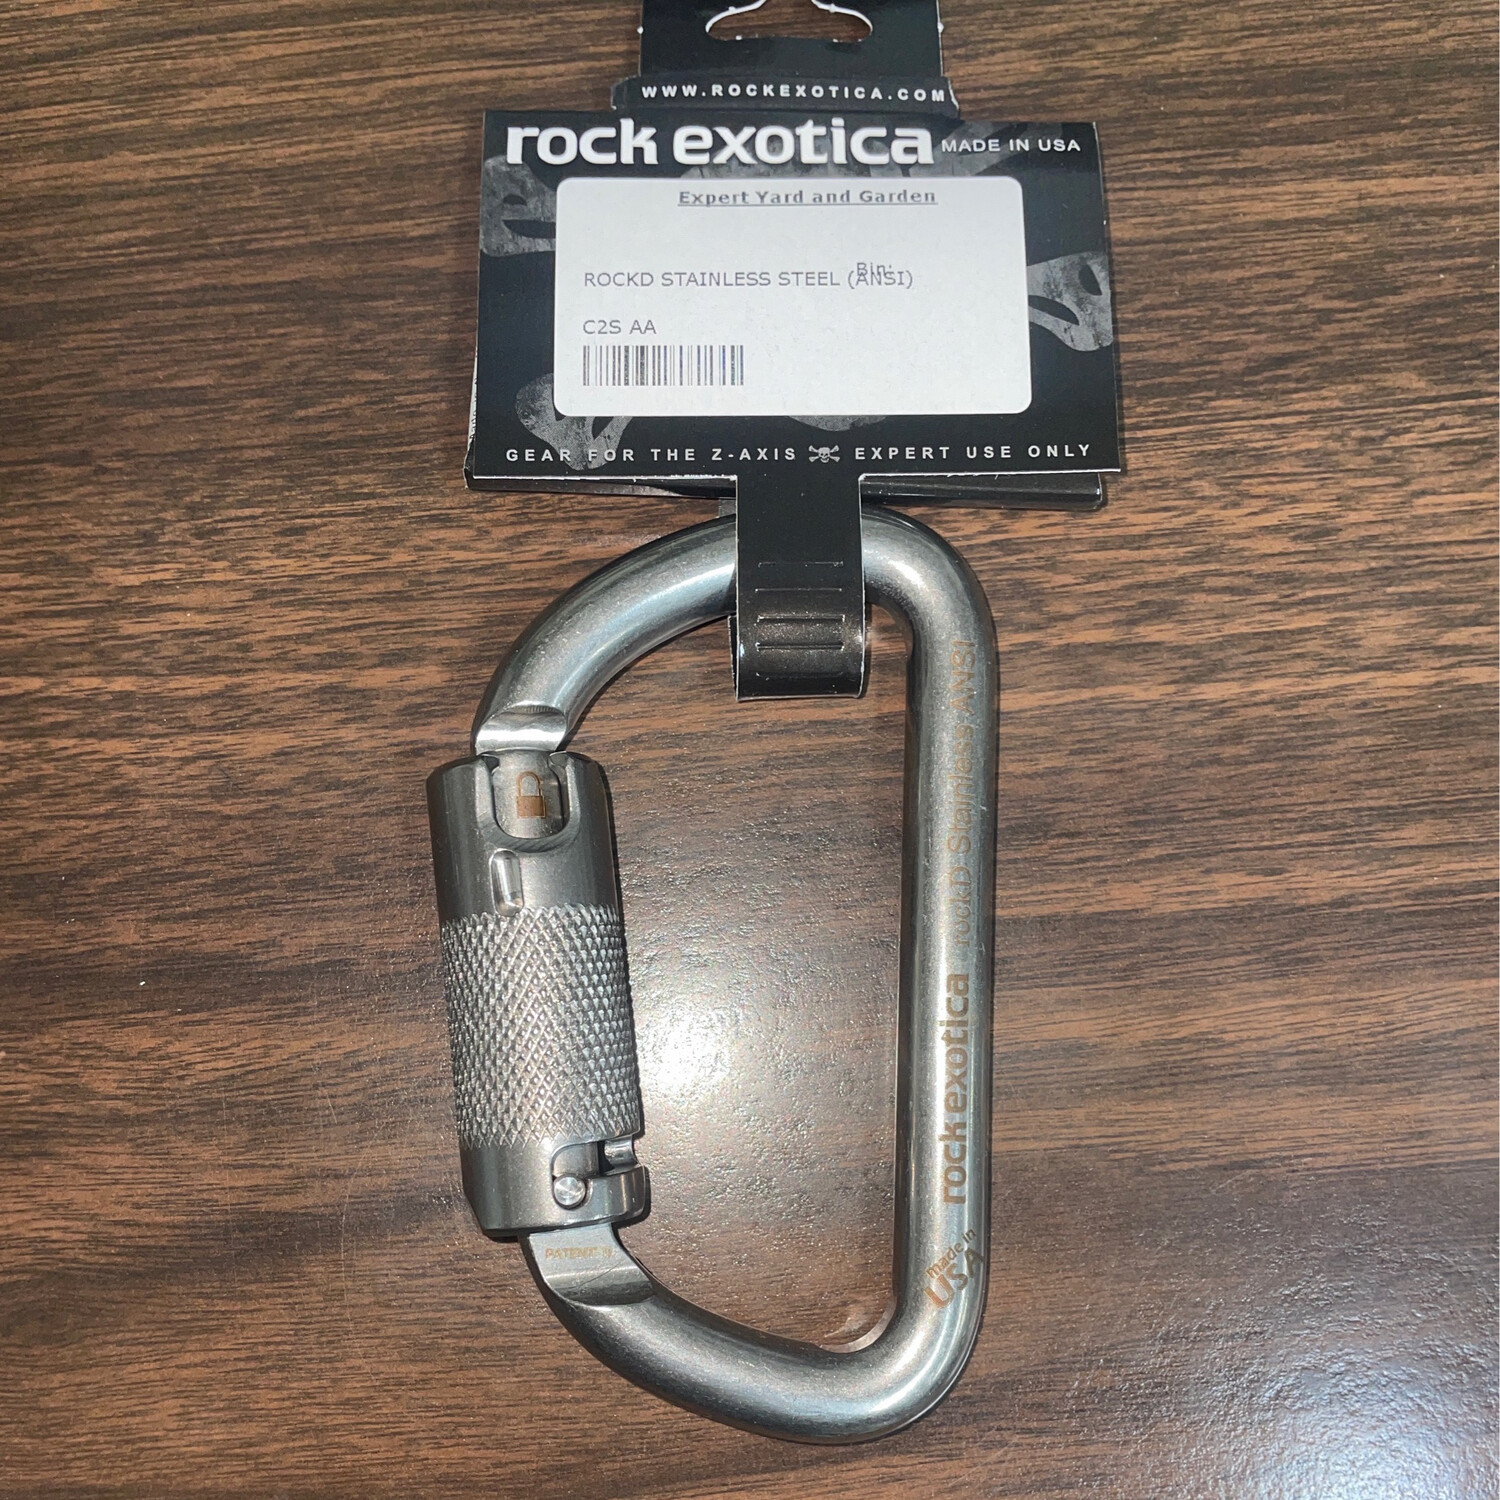 Rock Exotica RockD Stainless Steel Carabiner